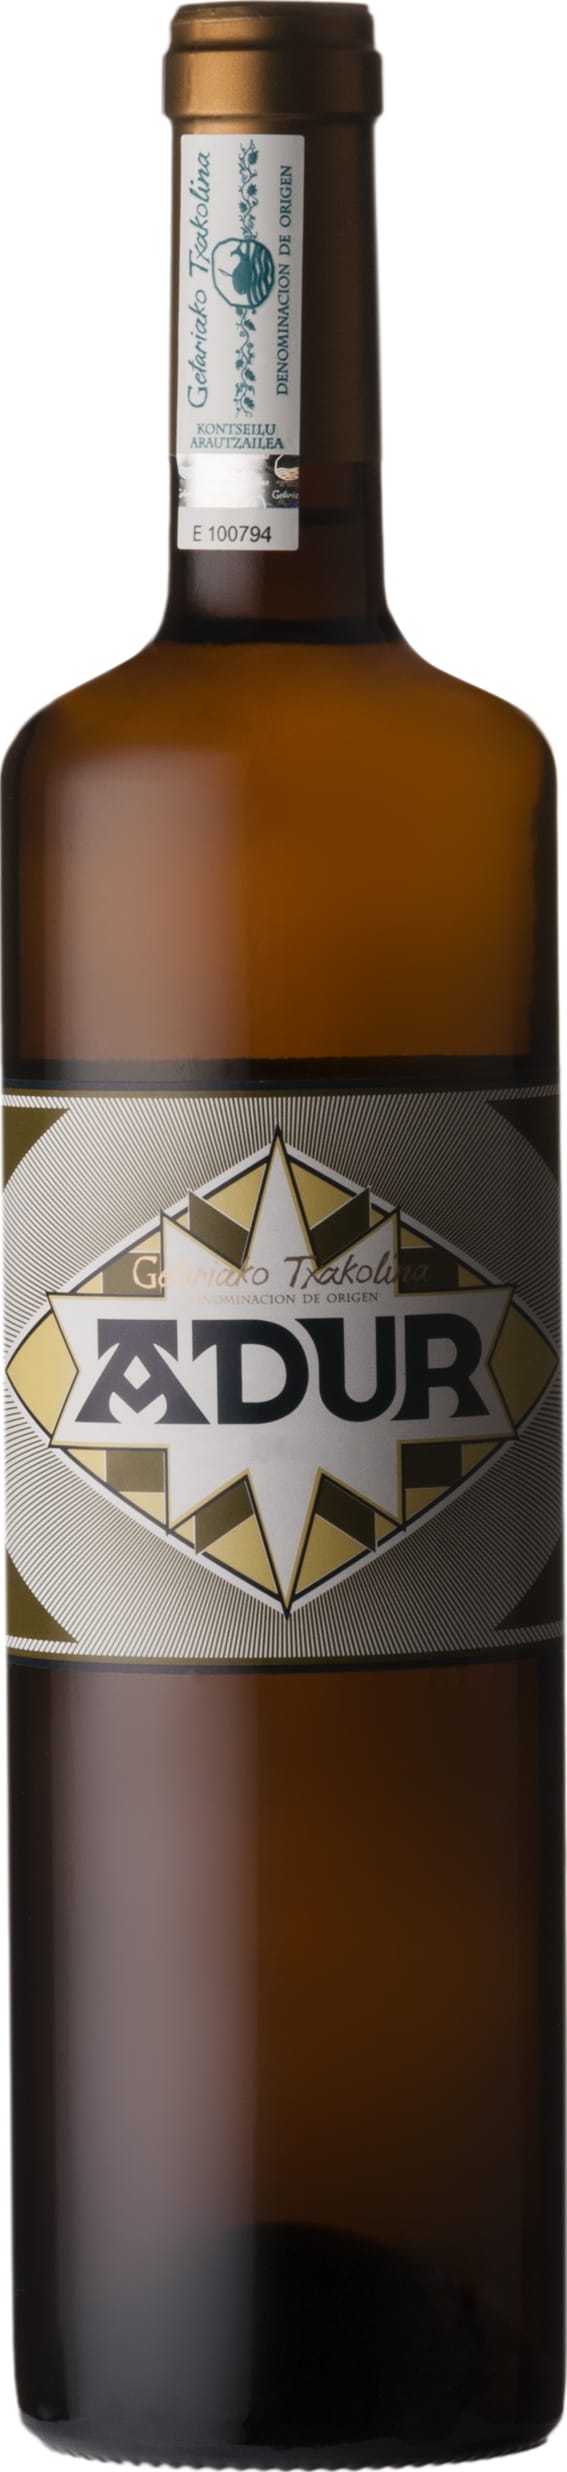 Adur Txakolina 2018 75cl - Buy Adur Wines from GREAT WINES DIRECT wine shop